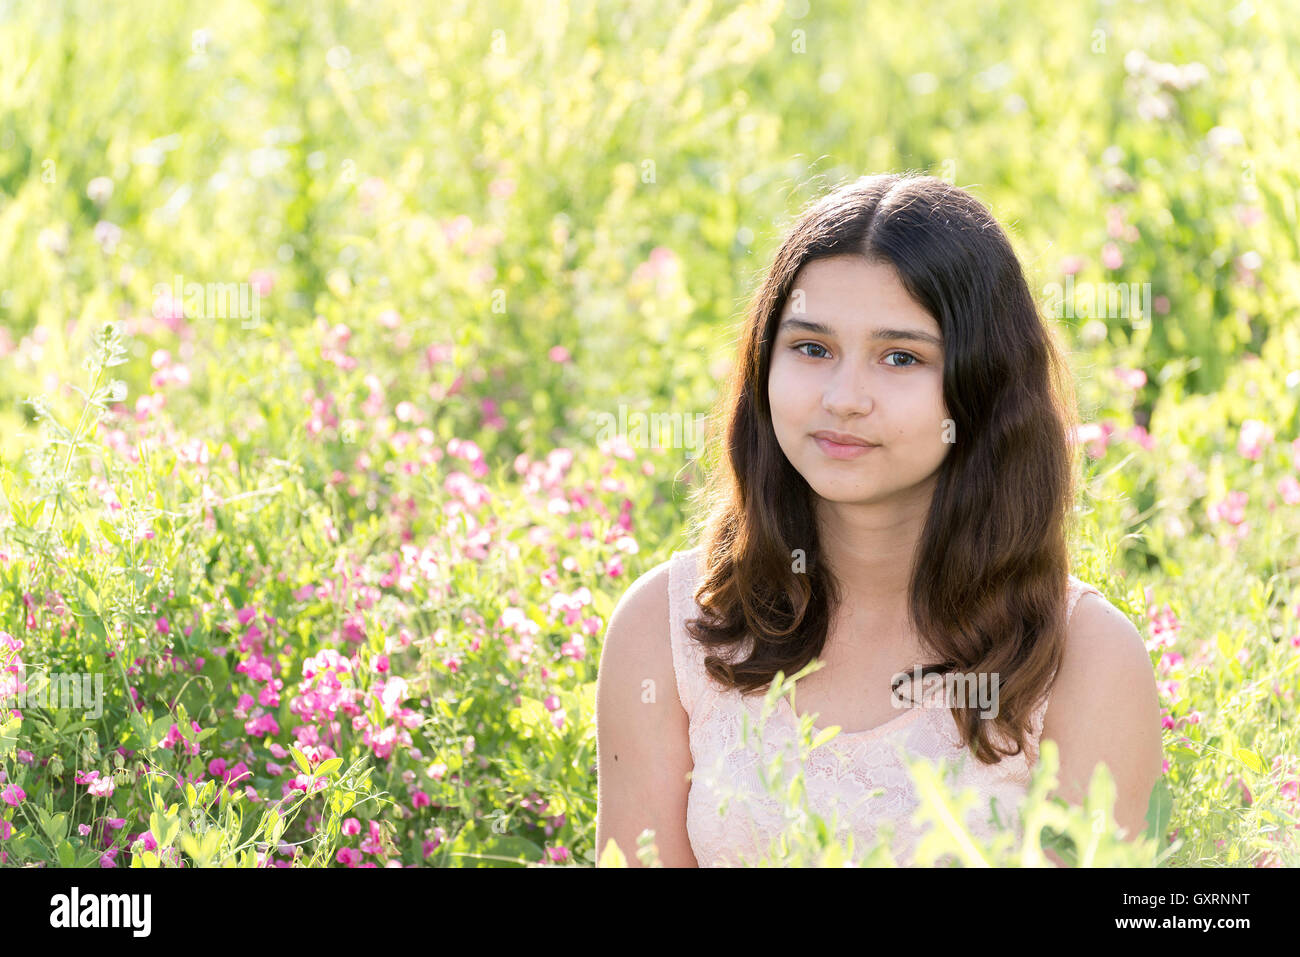 Modest well-groomed girl on summer flower meadow Stock Photo